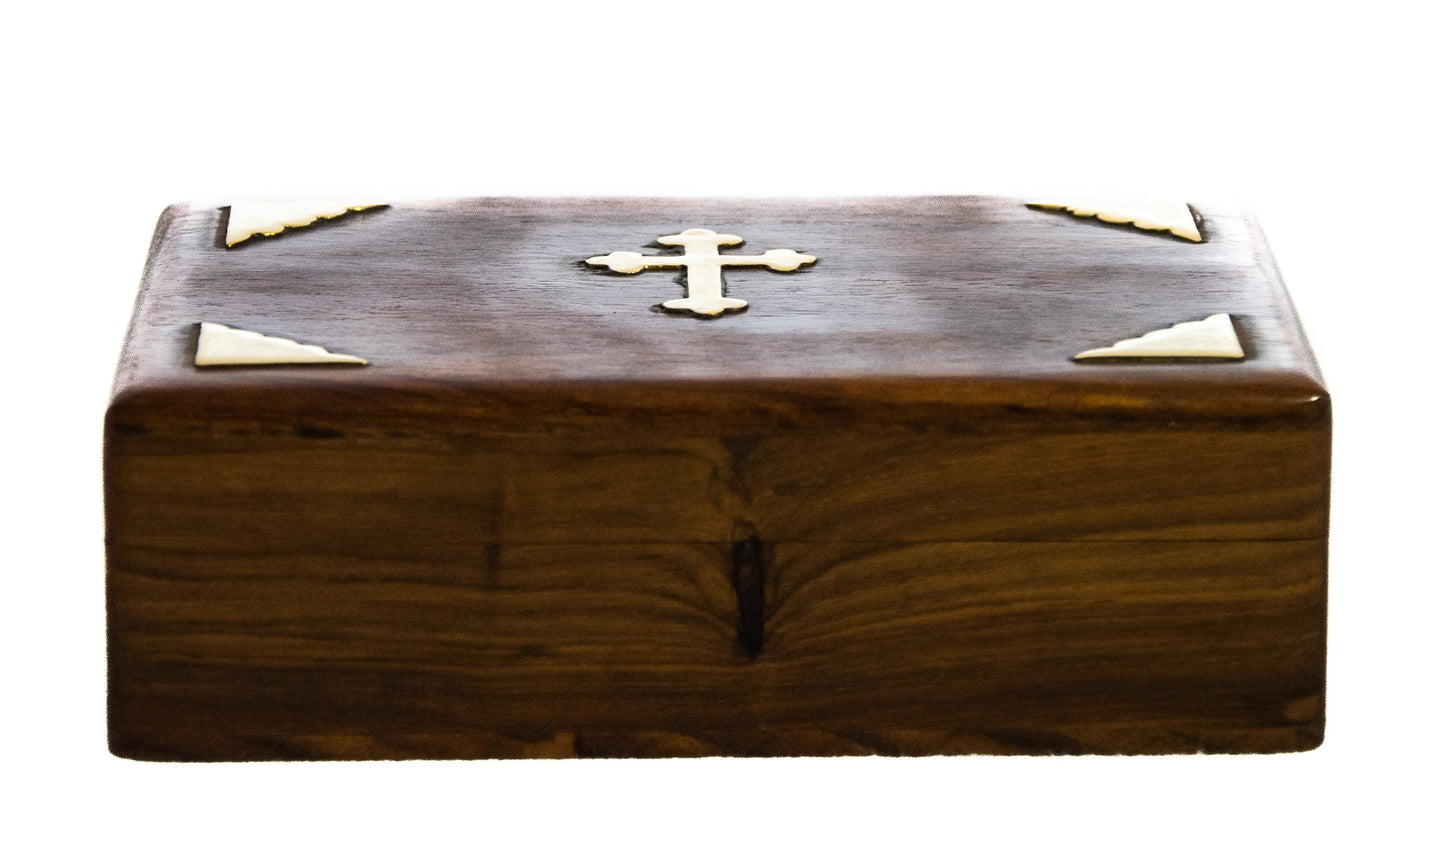 Handmade Religious carved wooden Prayer box with Christian Cross, Greek Vintage Decorative Jewelry Keepsake box 15x10x5cm, baptism gift TheHolyArt